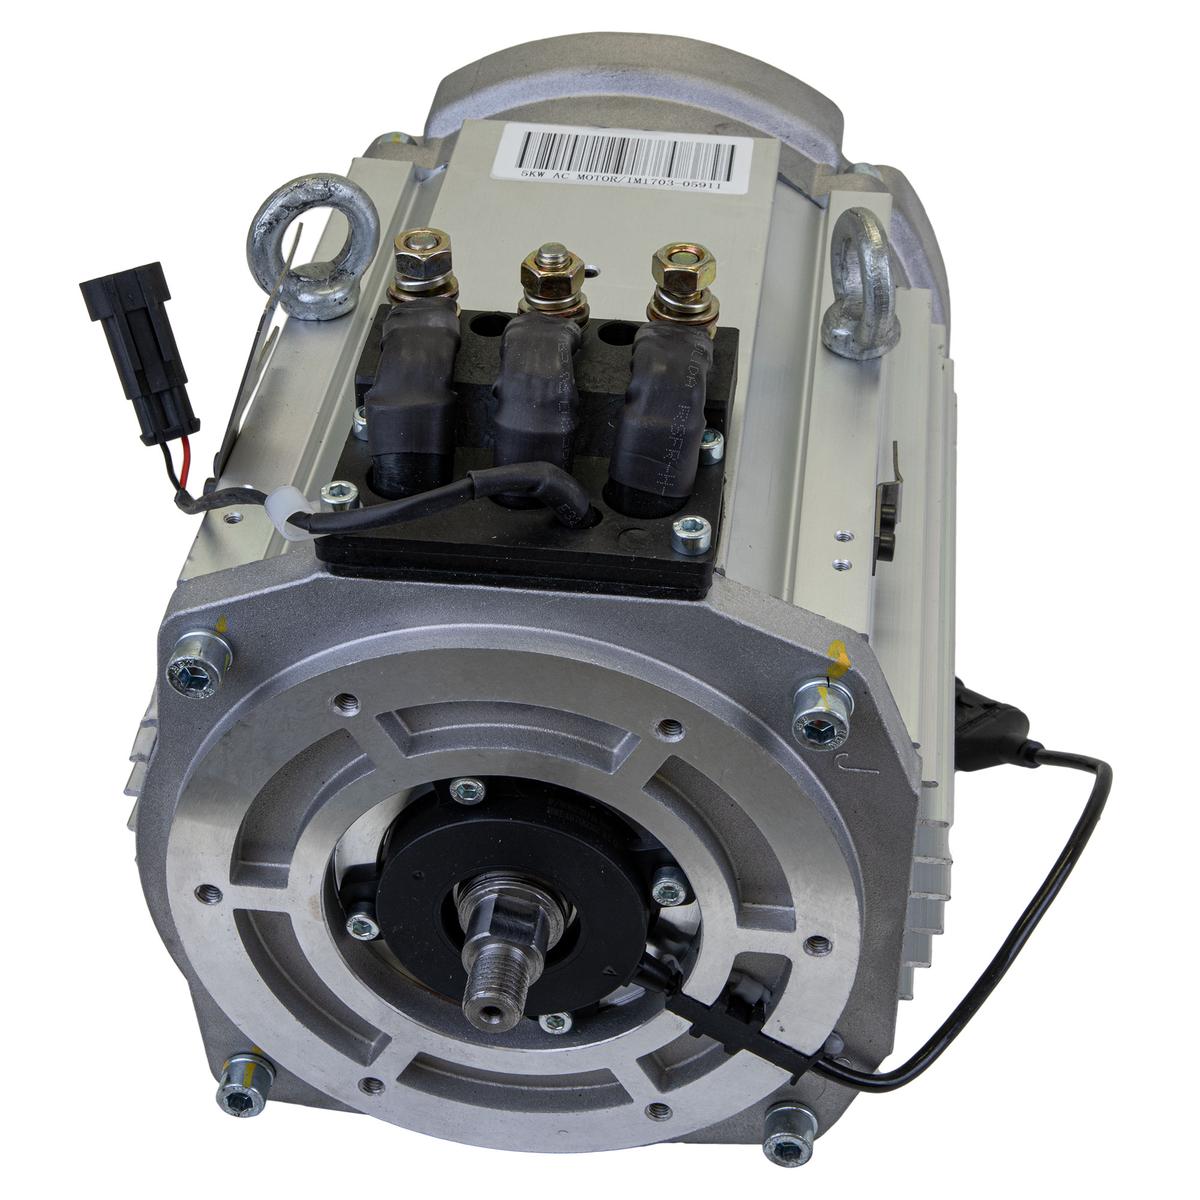 MadJax XSeries Storm Reliance 3 Phase AC Motor